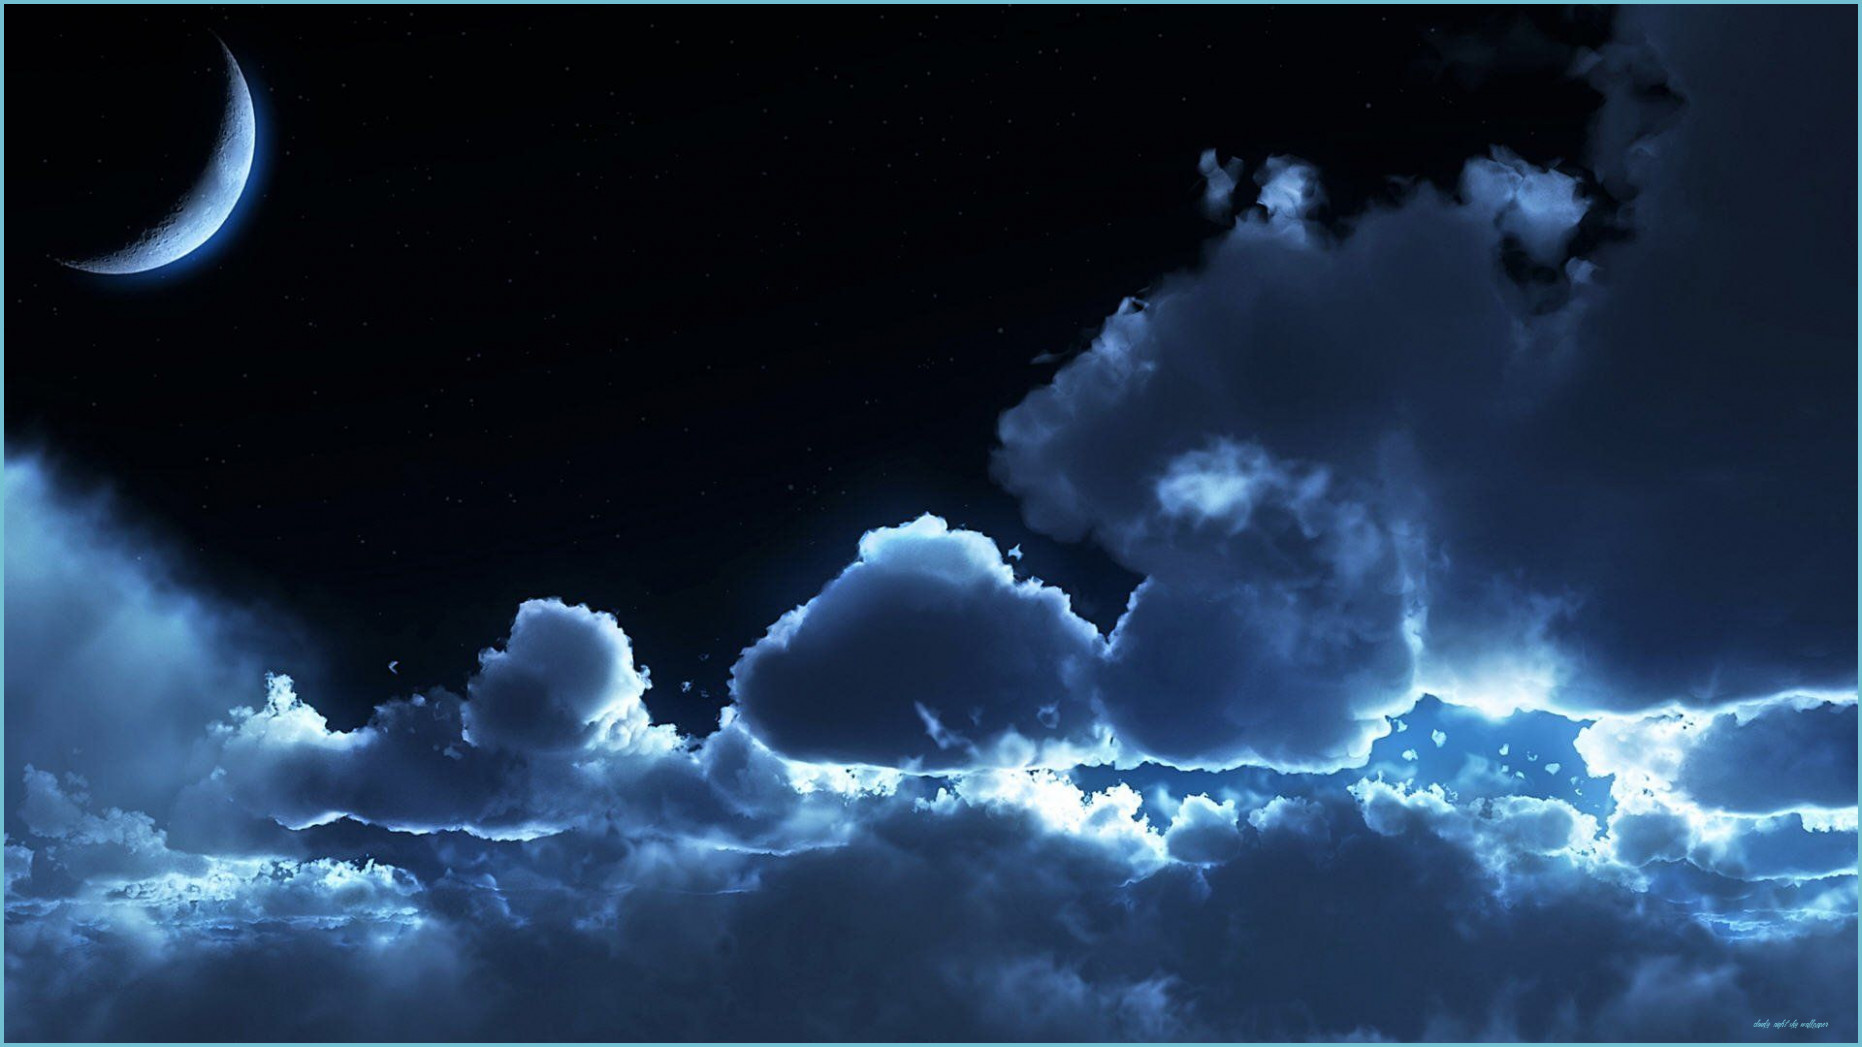 Cloudy Night Wallpaper Night Clouds, Night Sky Wallpaper, Clouds Night Sky Wallpaper